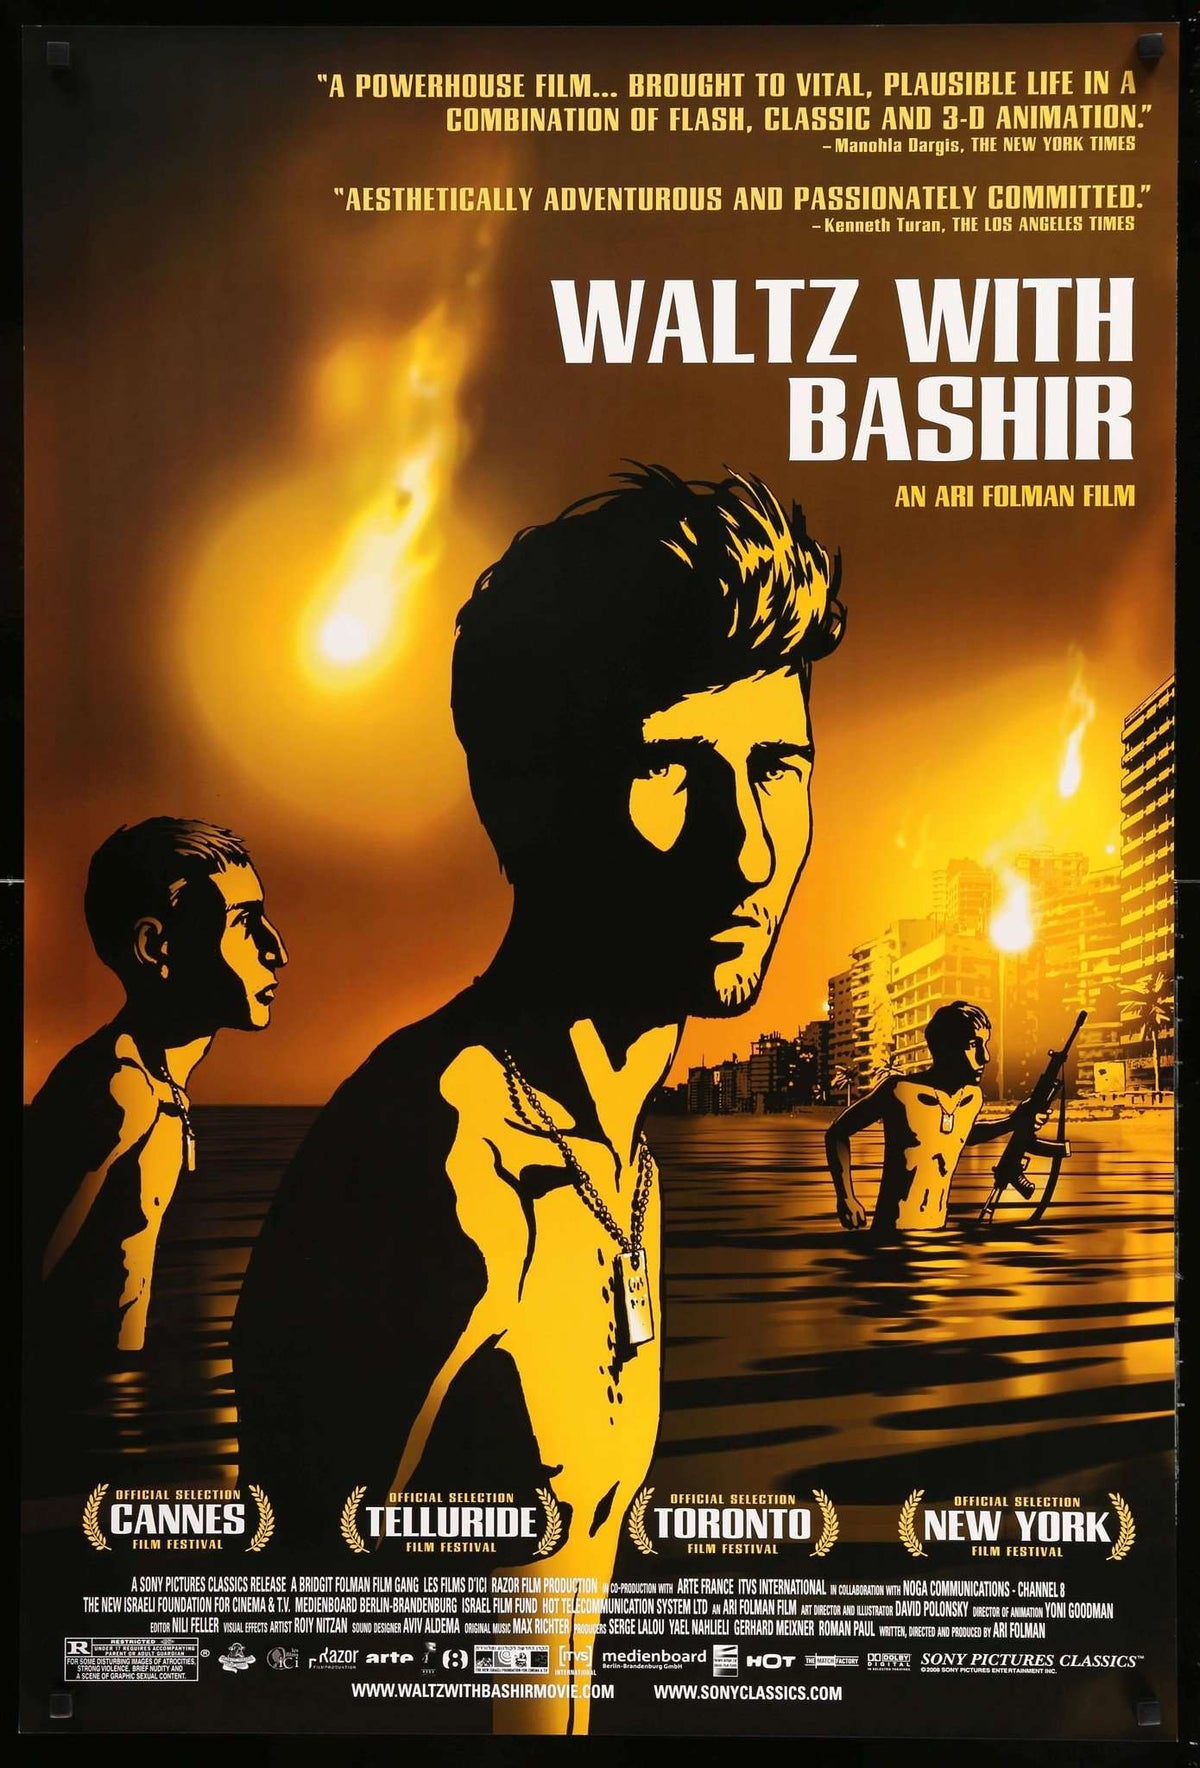 Waltz with Bashir (2008) original movie poster for sale at Original Film Art